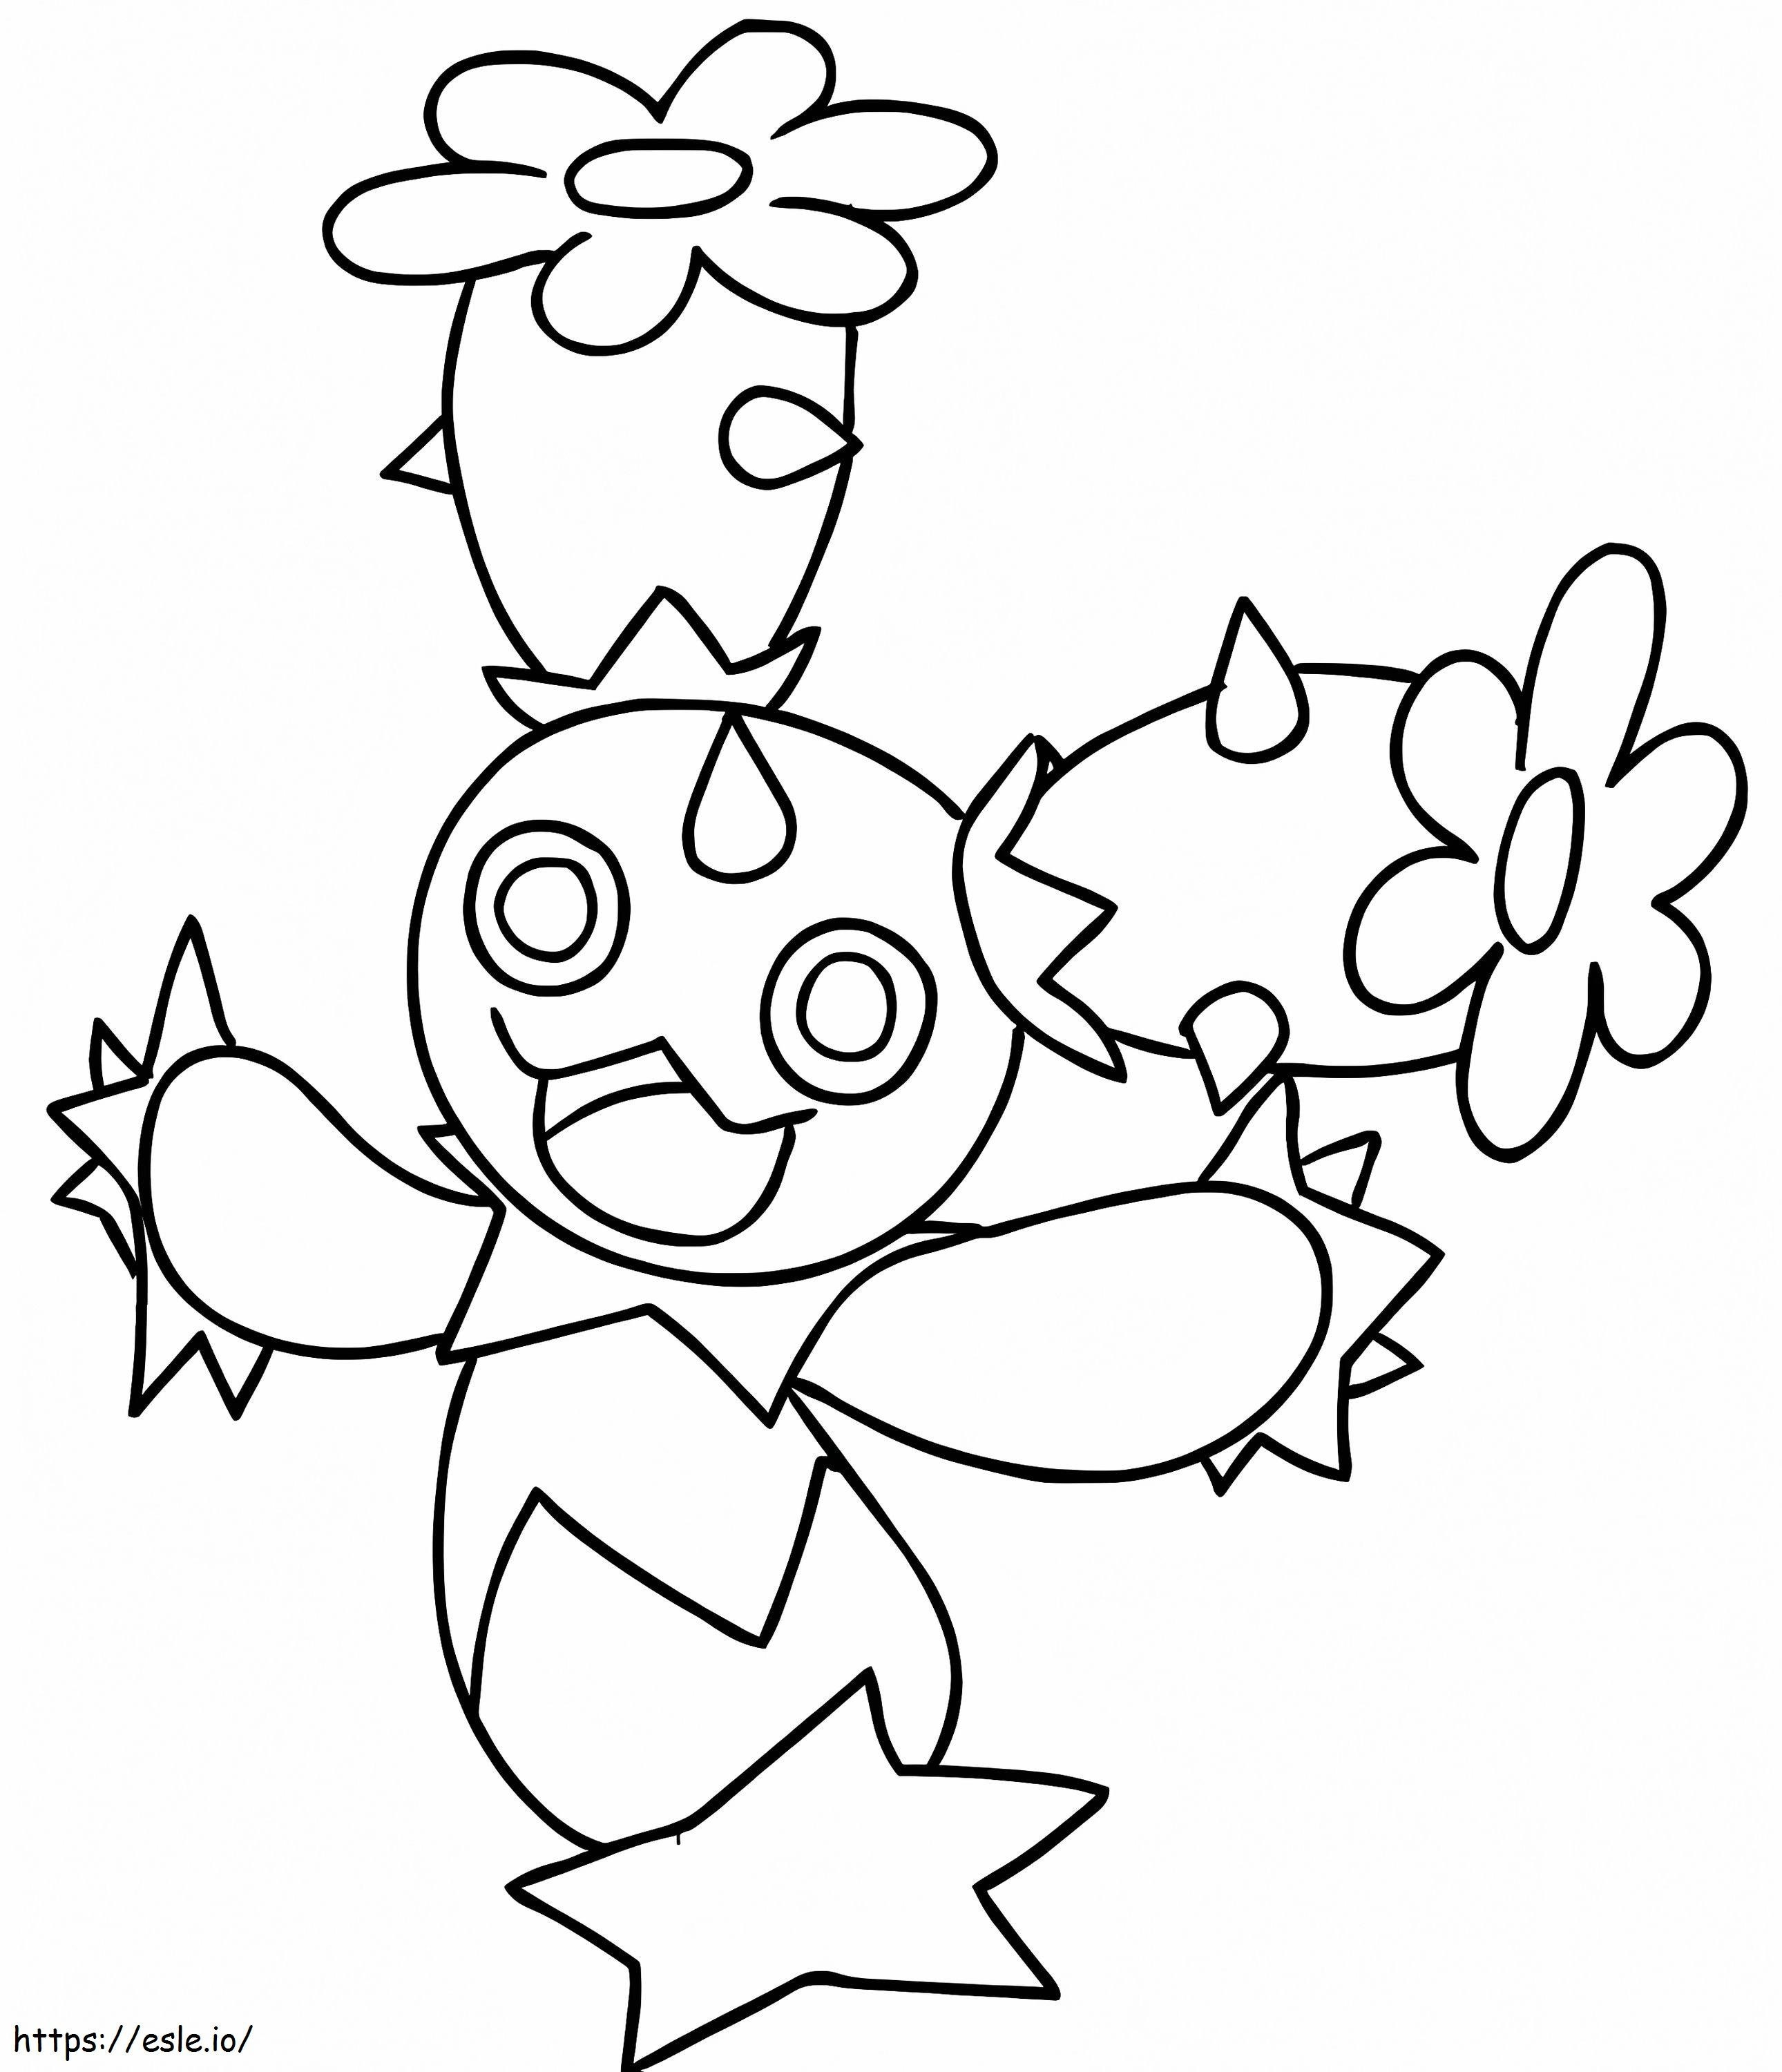 Maractus-Pokémon 1 ausmalbilder